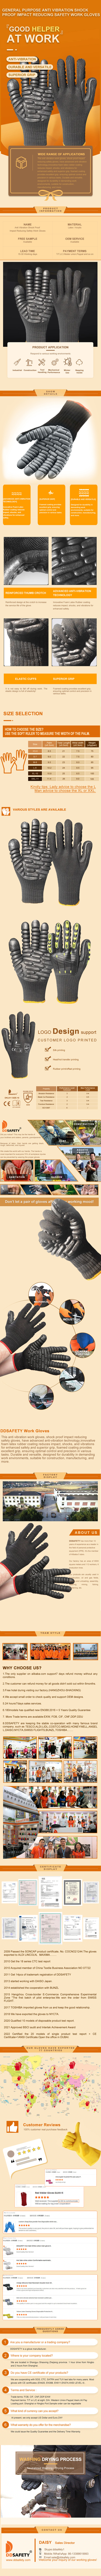 Anti Vibration Gloves, Impact Resistant - Work Gloves - DKL611 Anti Vibration Gloves, Impact Resistant - Work Gloves - DKL611 gloves,Anti Vibration Gloves,work gloves